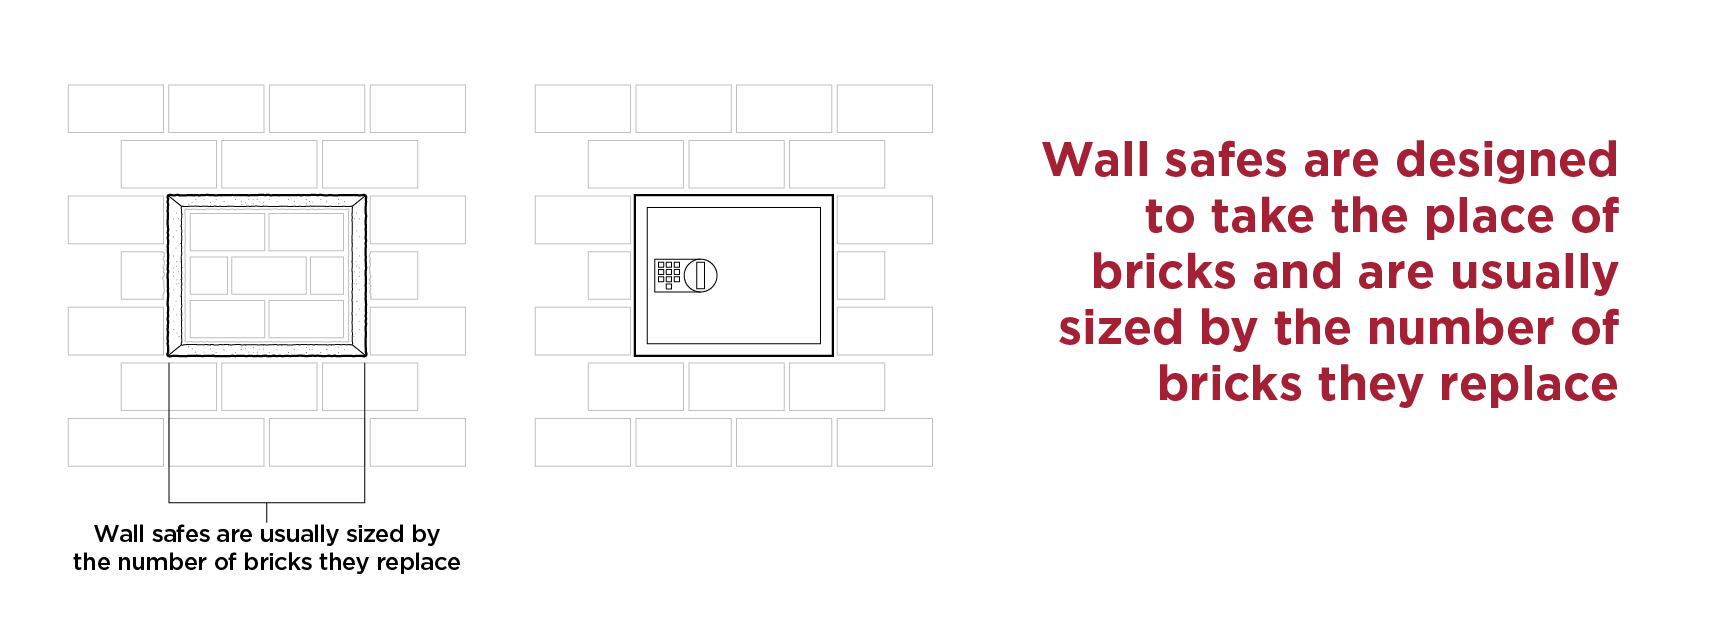 Wall Safes take up Bricks